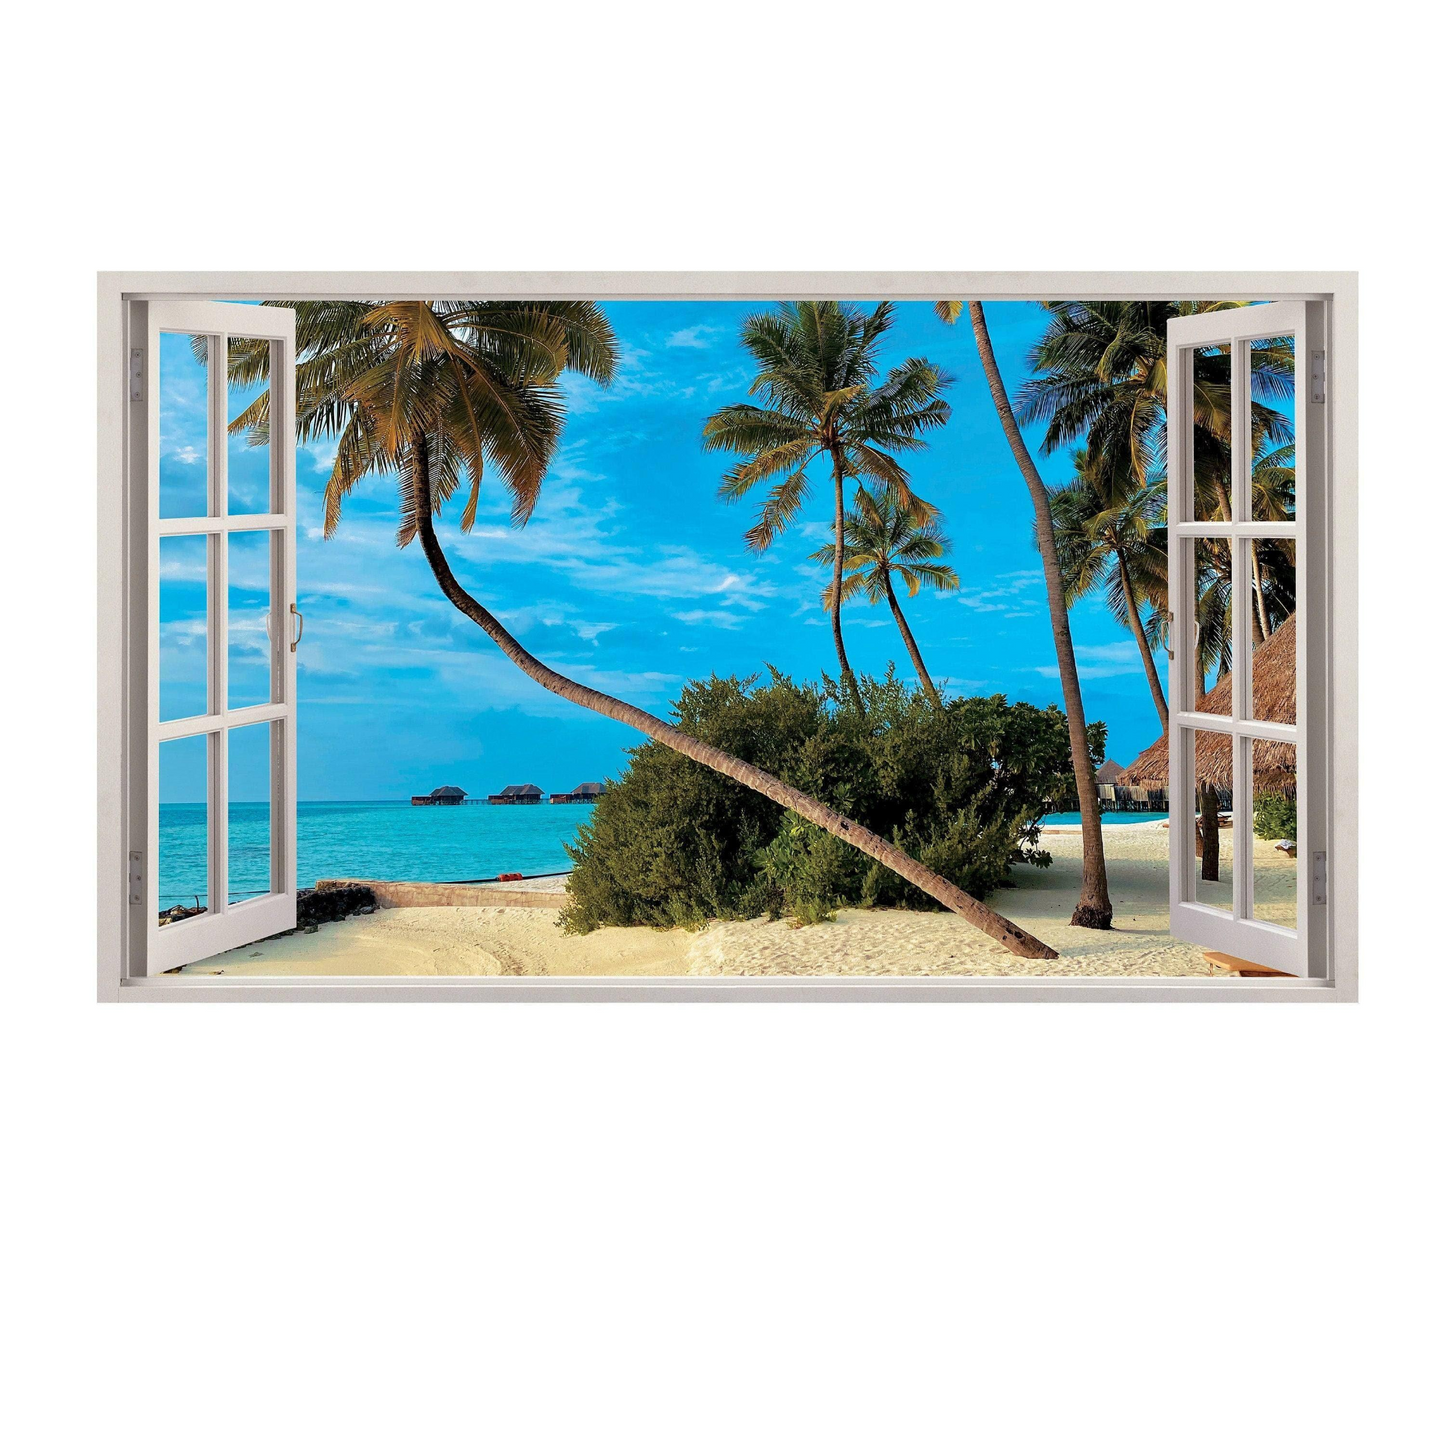 Tropical Paradise Window Sticker, Vinyl Decorative Window Cling Decal, Peel & Stick Film